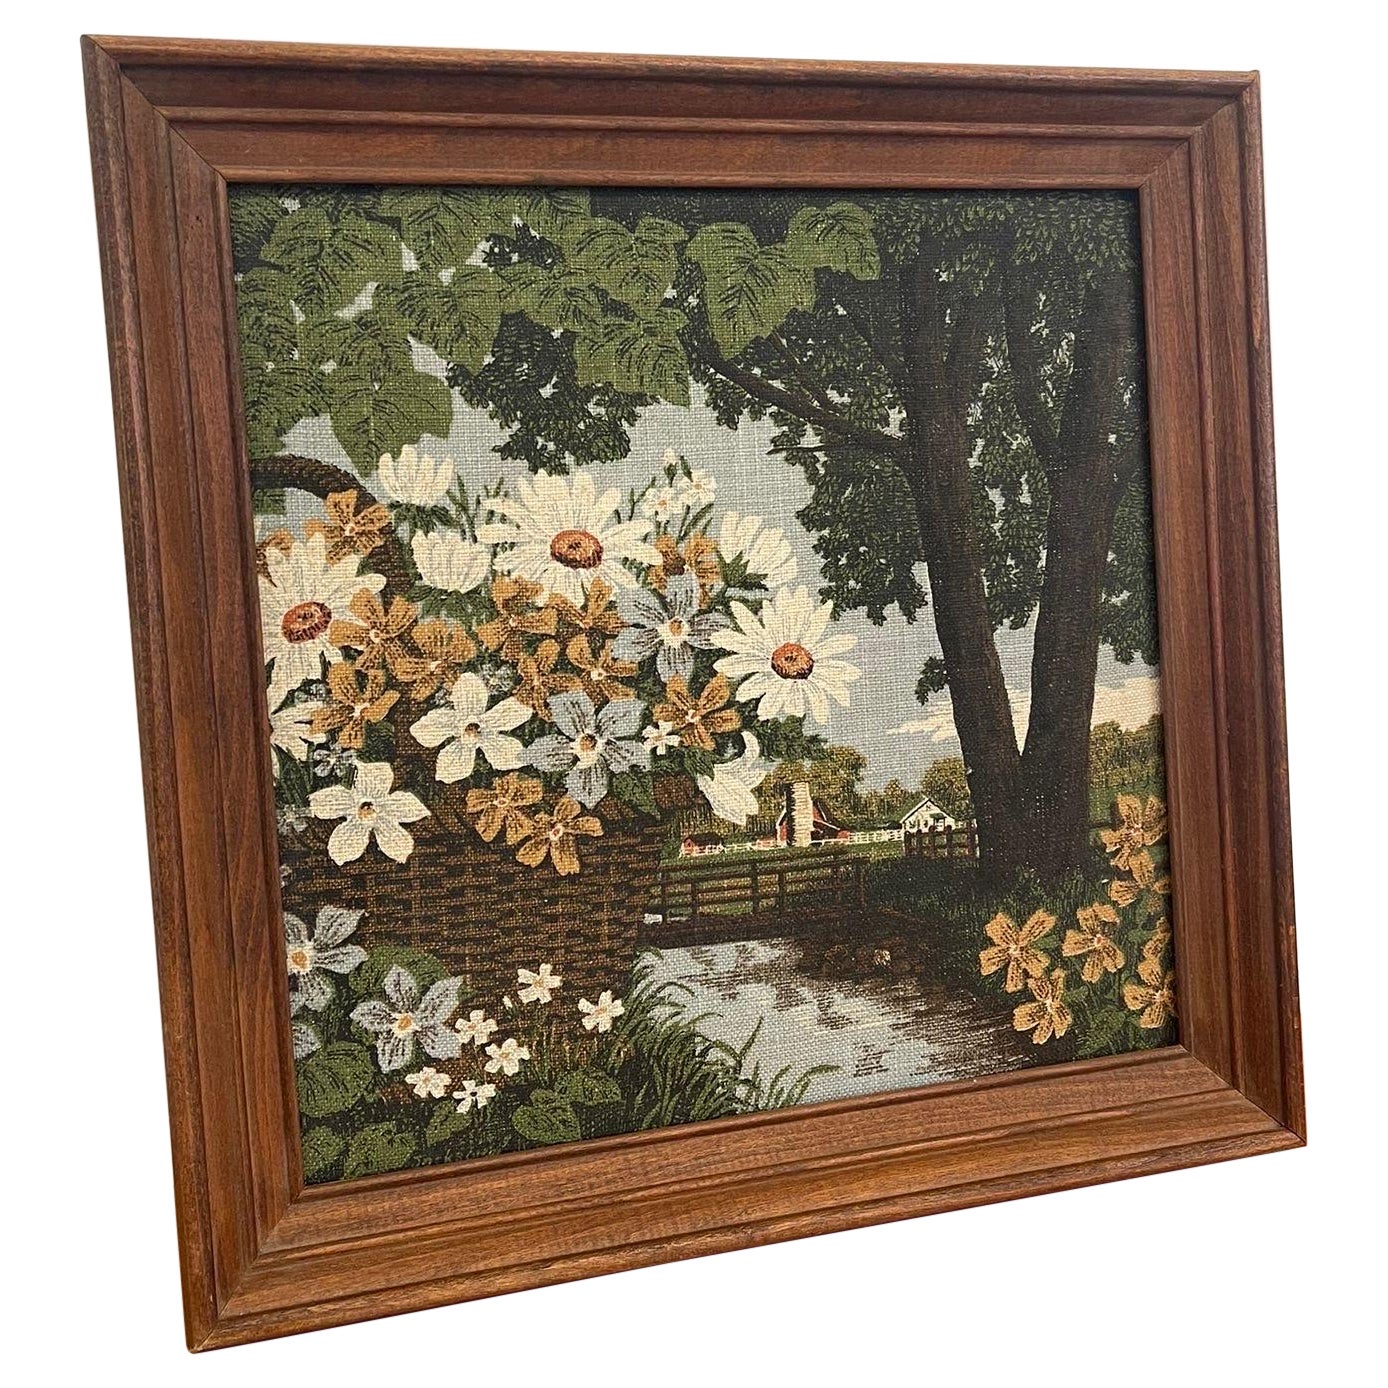 Vintage Kay Dee Floral Linen Print Within Wooden Frame. For Sale